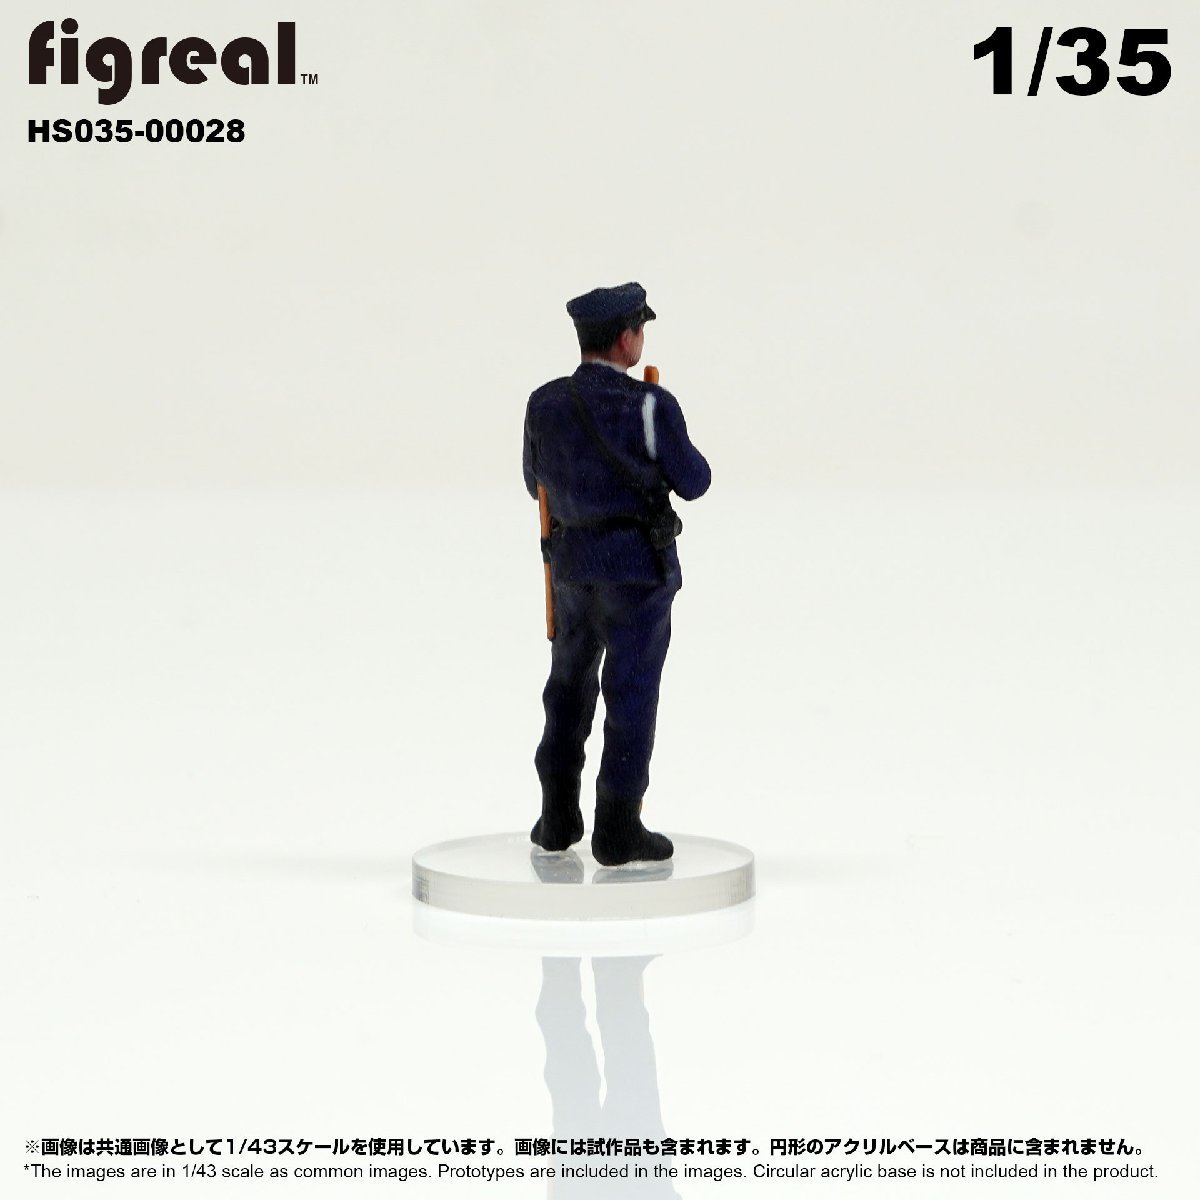 HS035-00028 figreal 旧日本警察官 1/35 高精細フィギュア_画像5